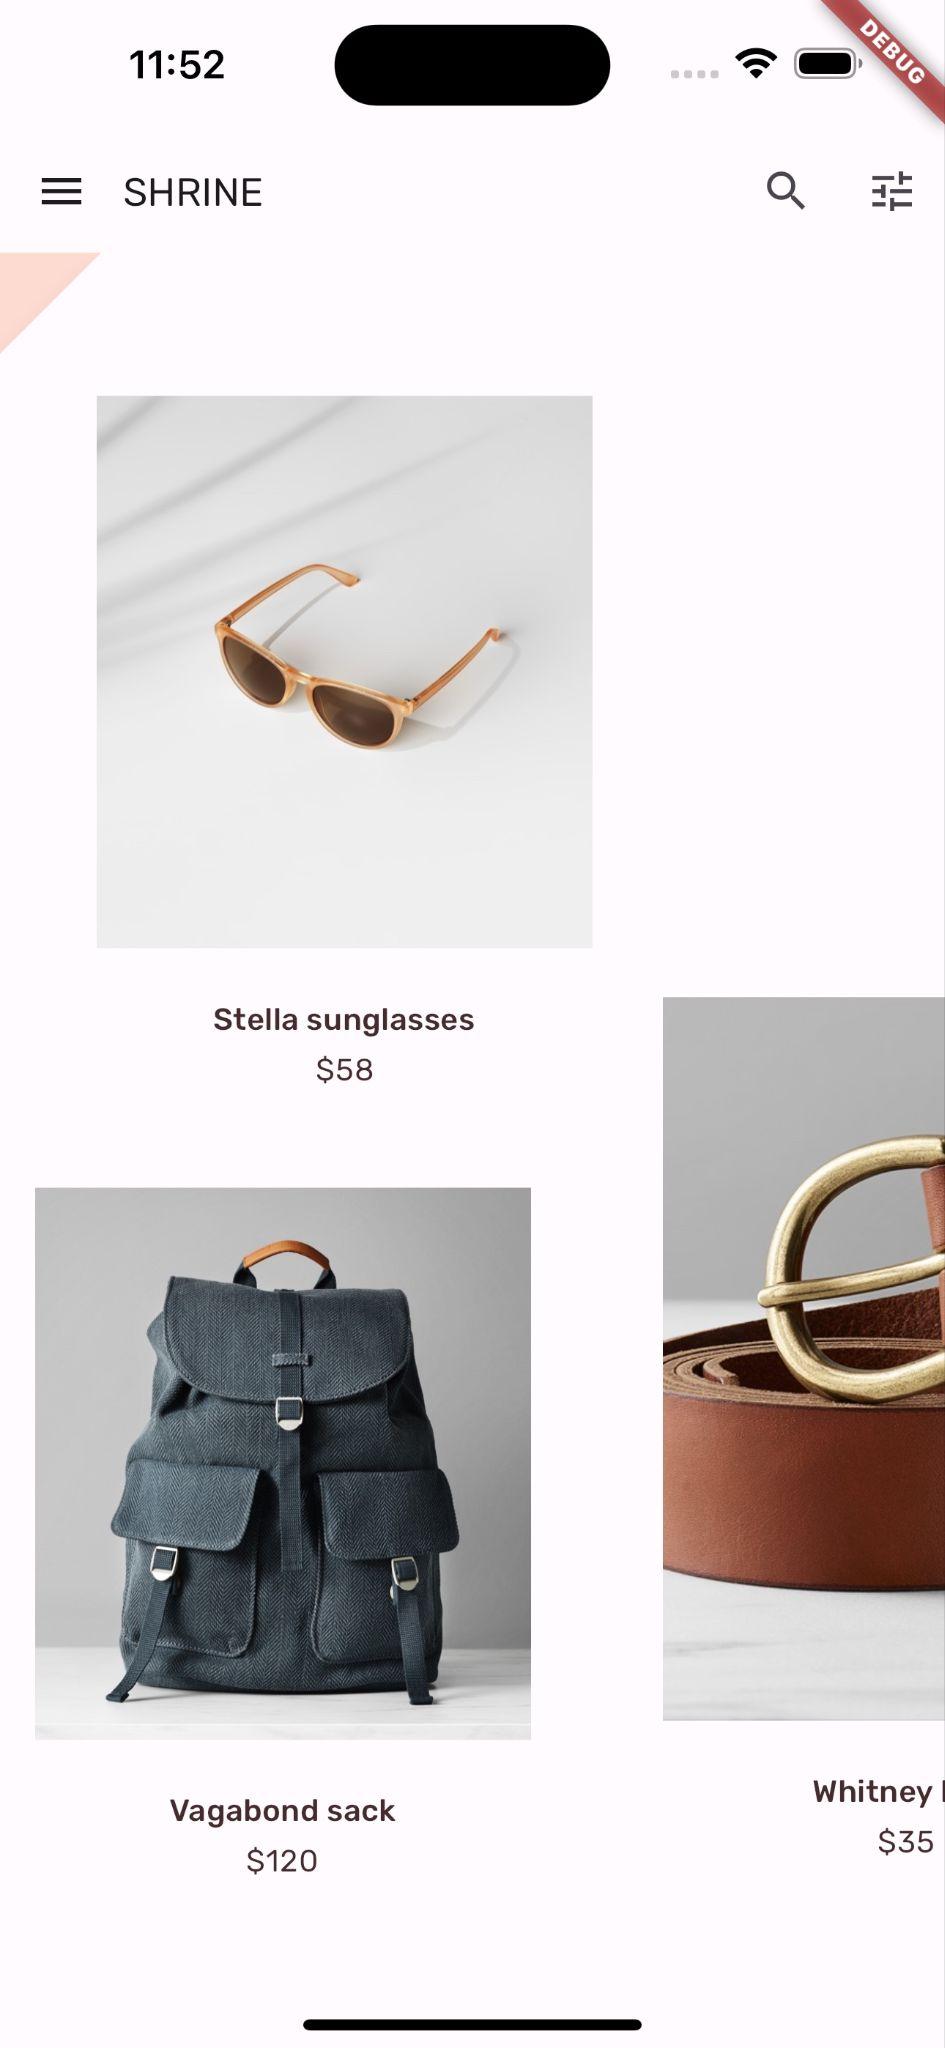 Shrine product page with custom shape